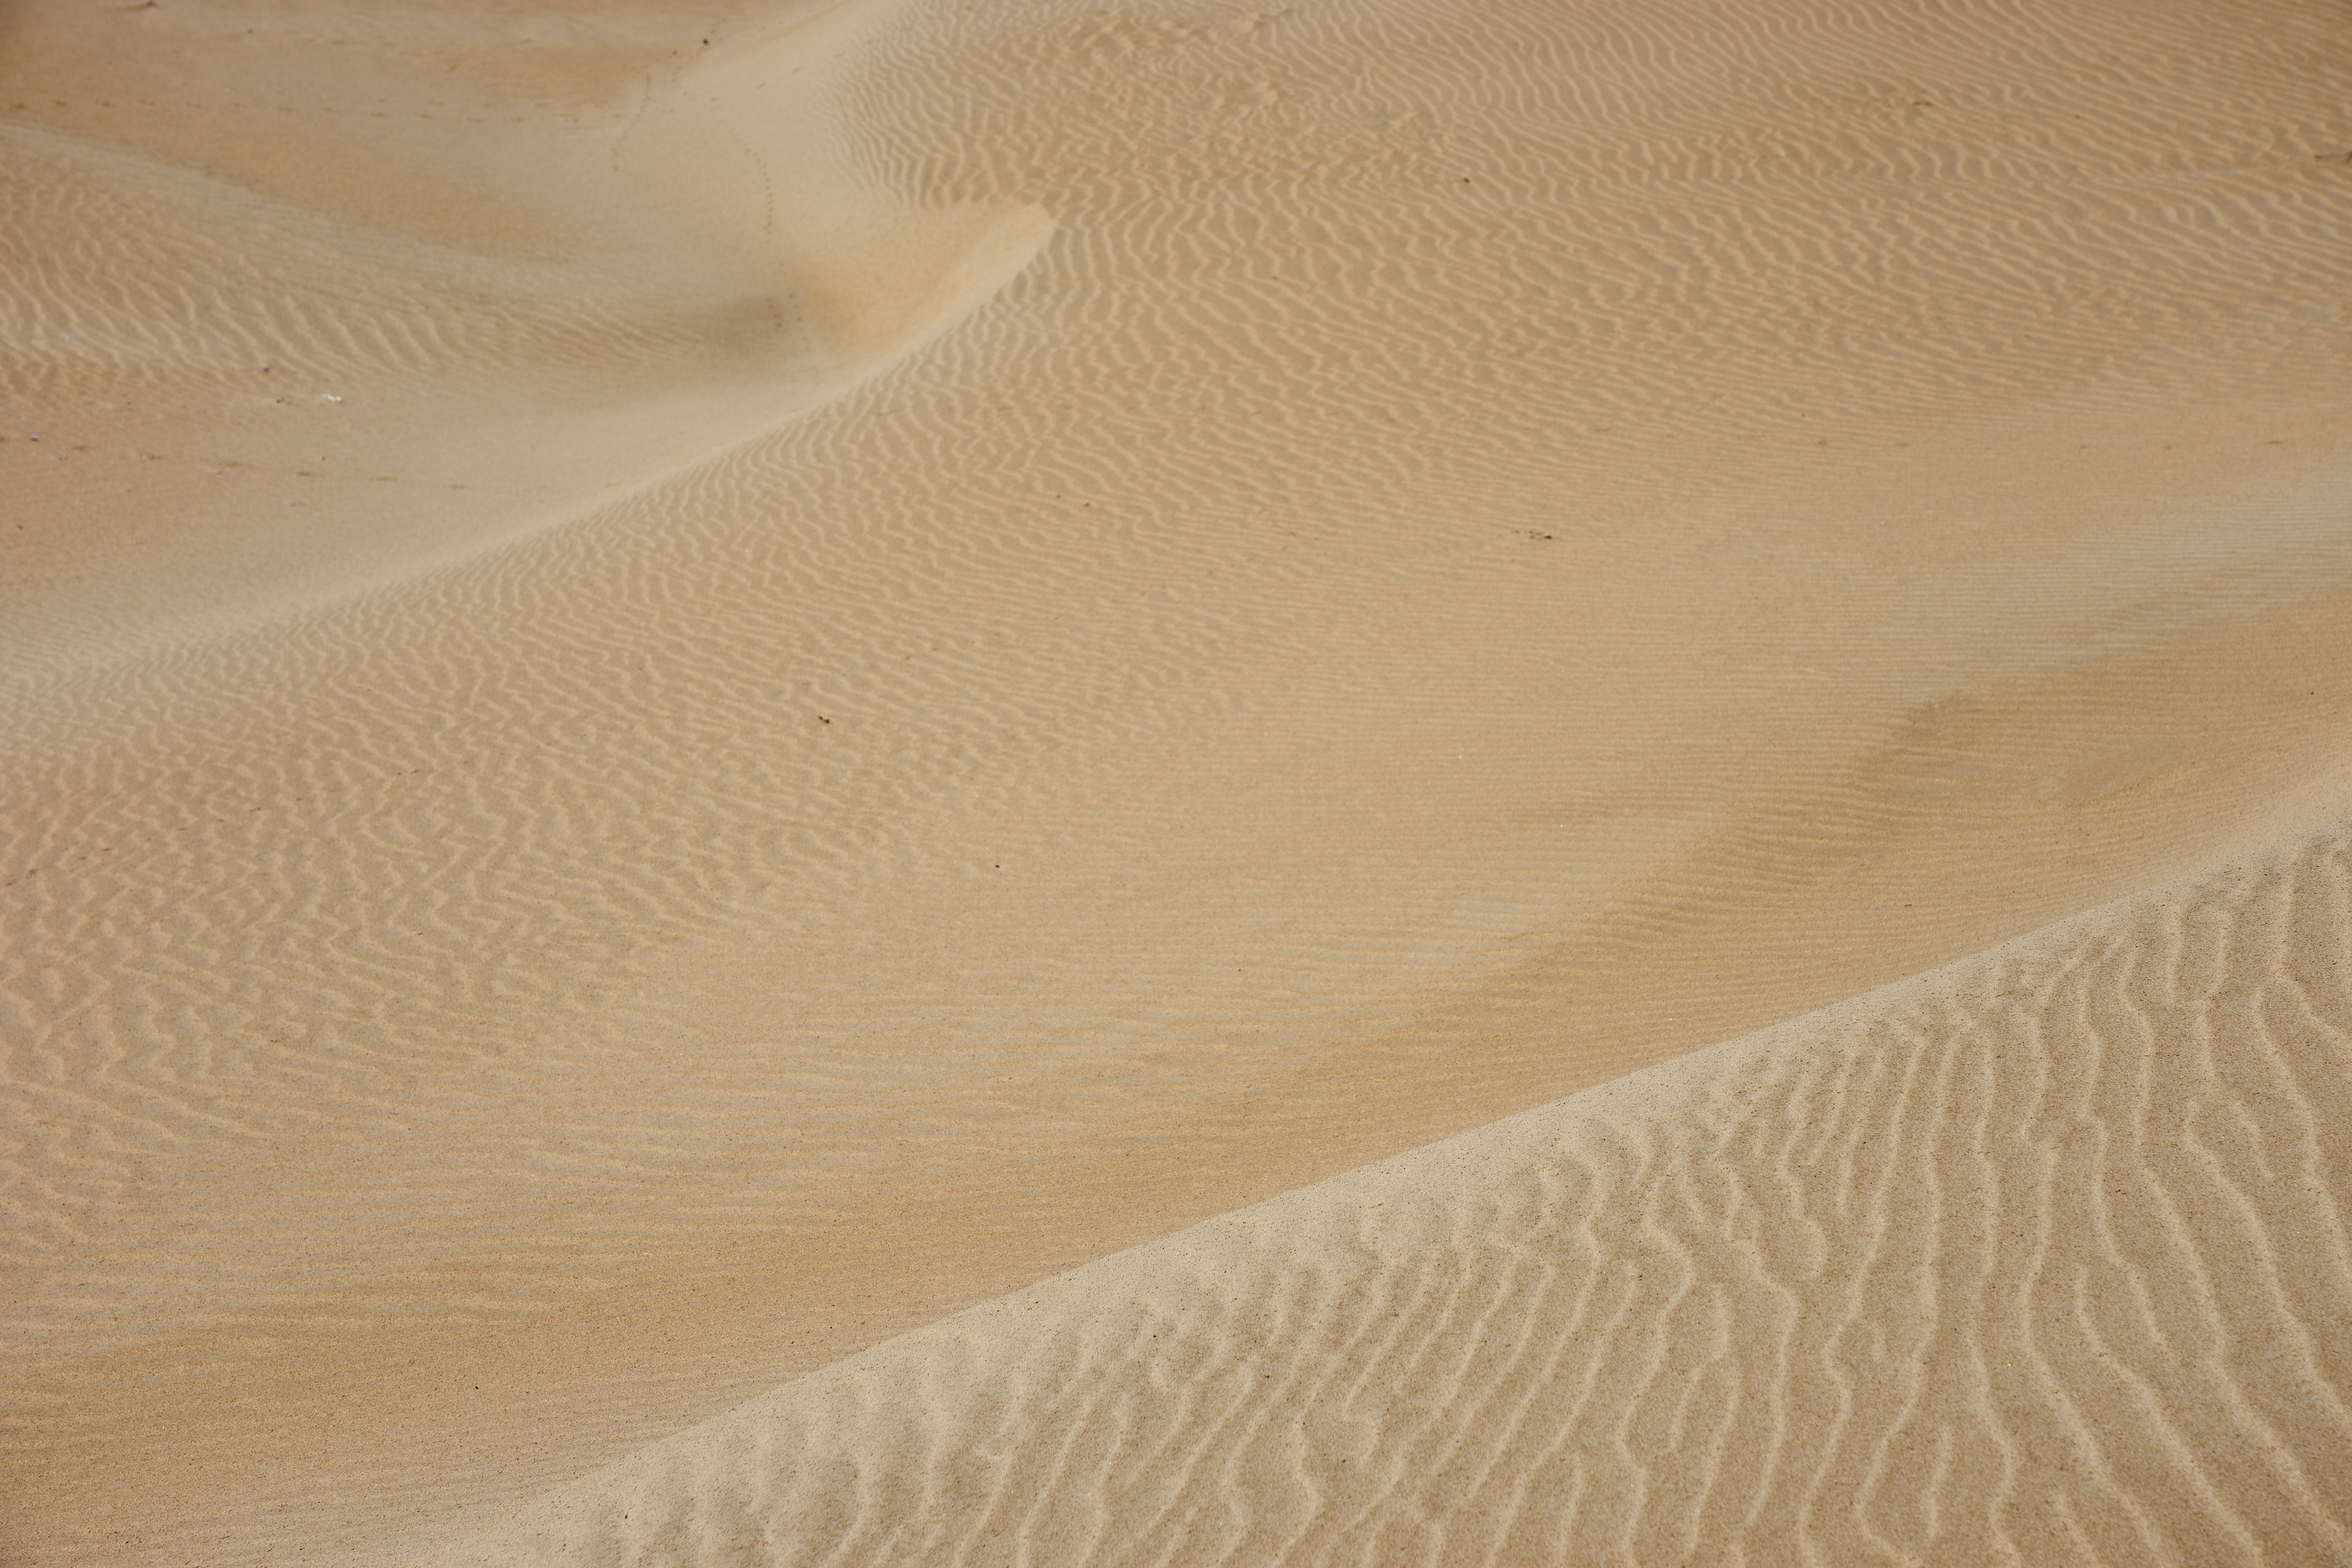 Download background waves, sand, desert, texture, textures, wavy